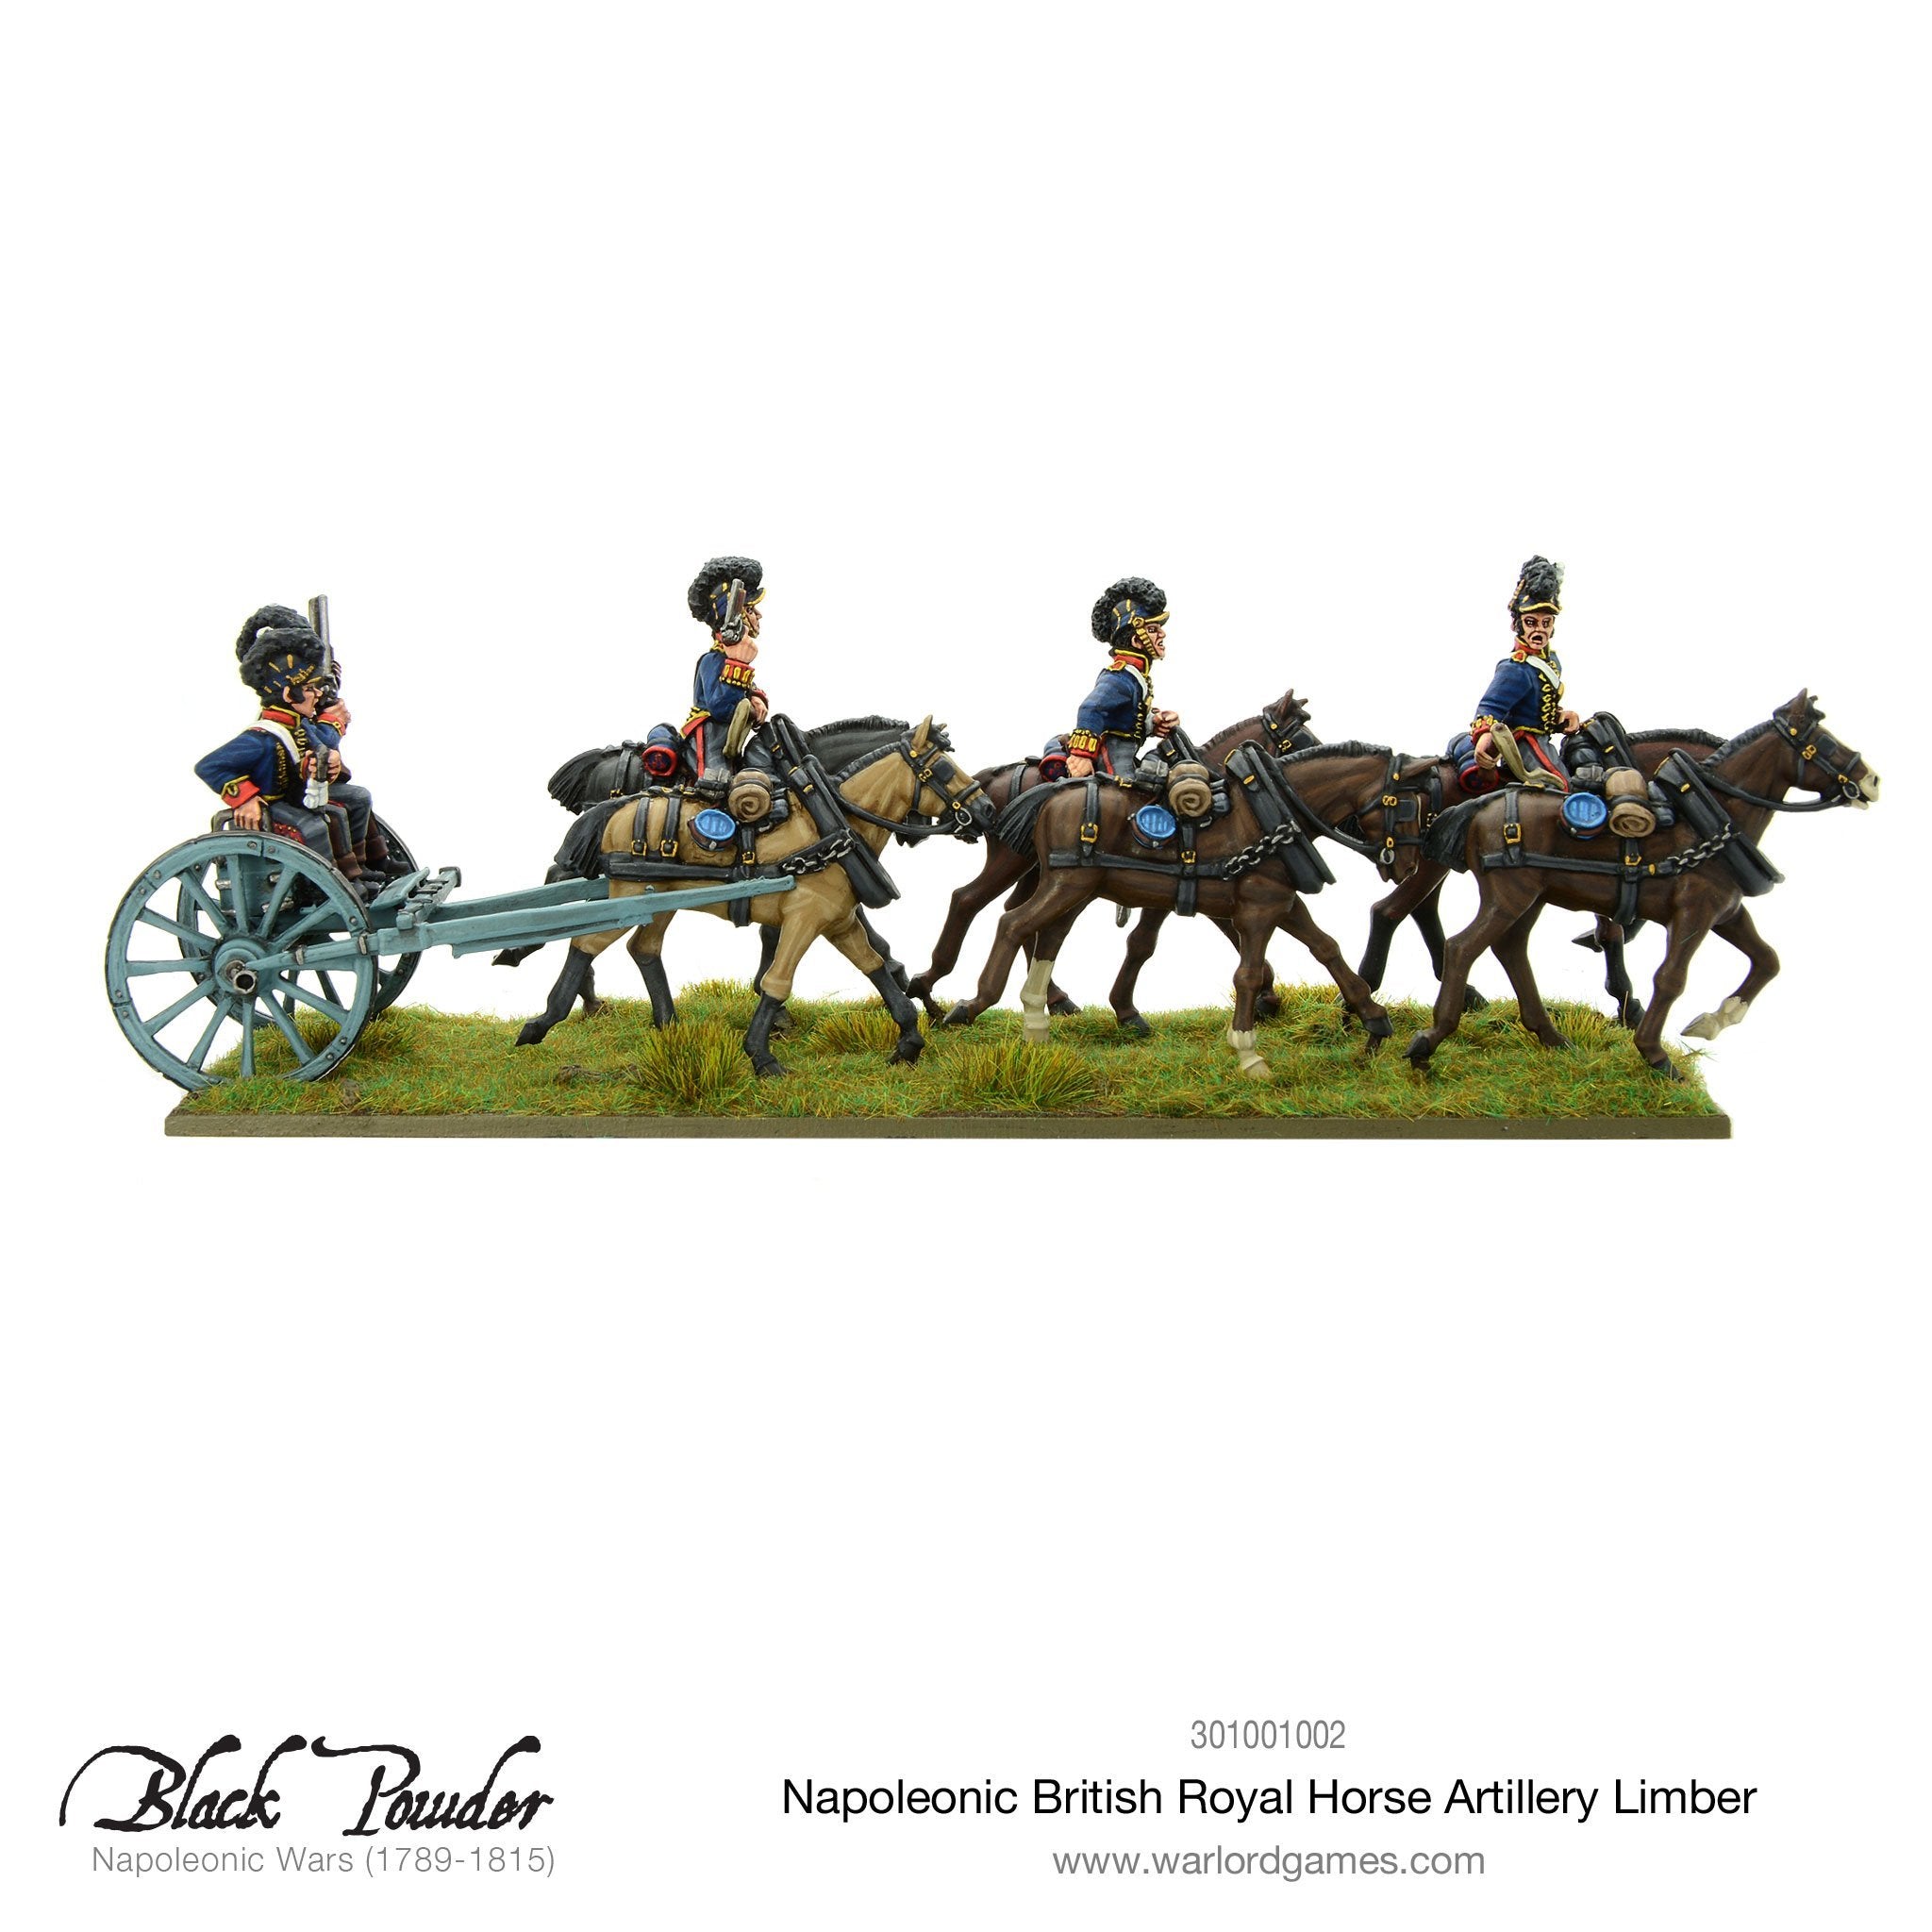 Napoleonic British Royal Horse Artillery limber